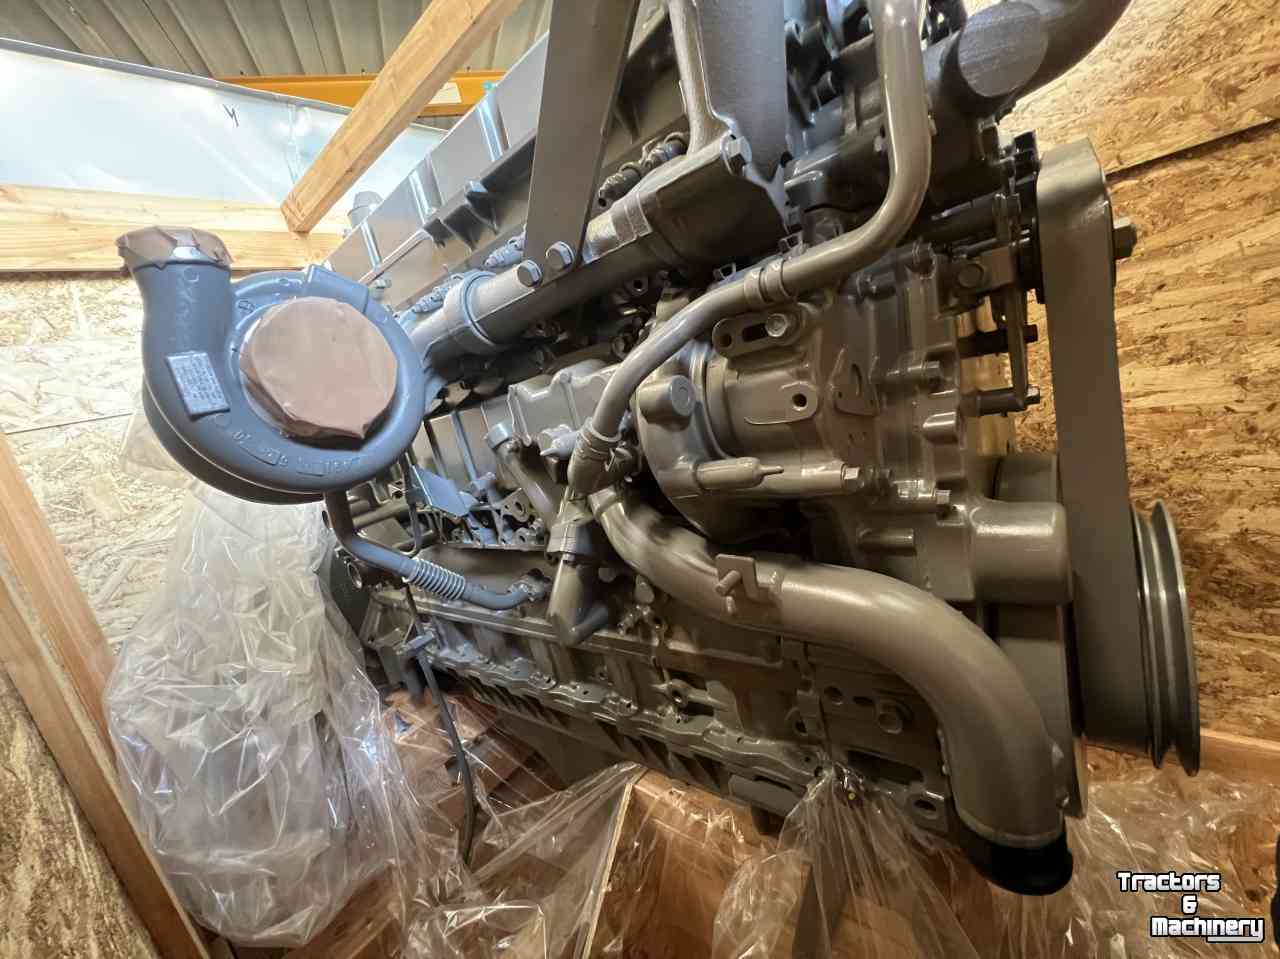 Raupenbagger Case ISUZU Motor Parts nr:47436013/ 6WG1XYSS-02